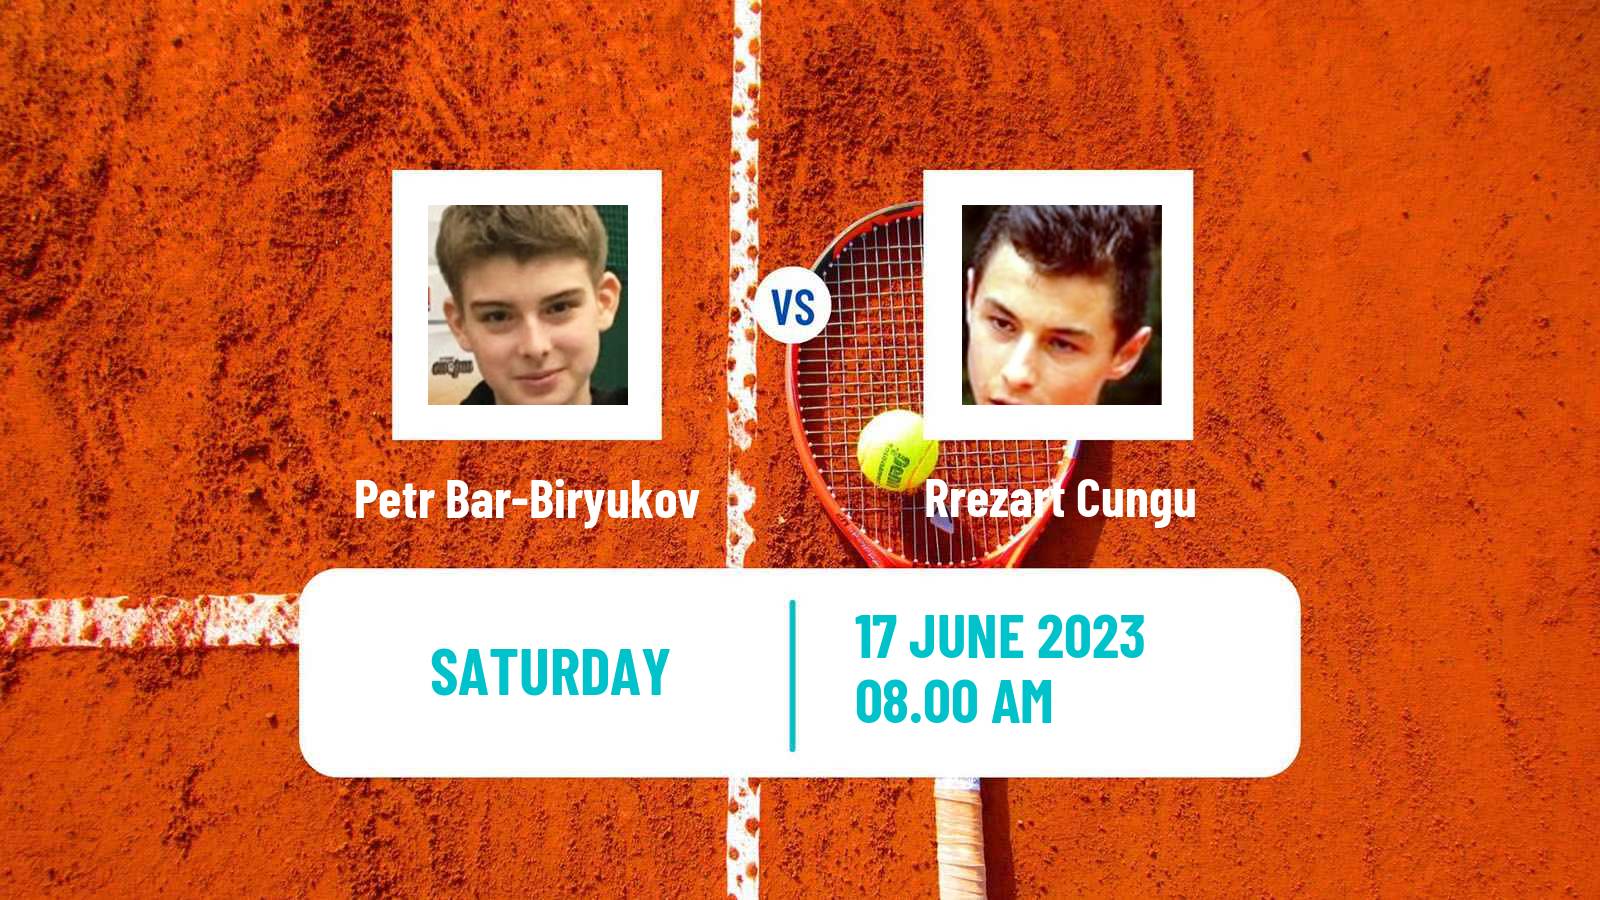 Tennis ITF M15 Kursumlijska Banja 5 Men Petr Bar-Biryukov - Rrezart Cungu